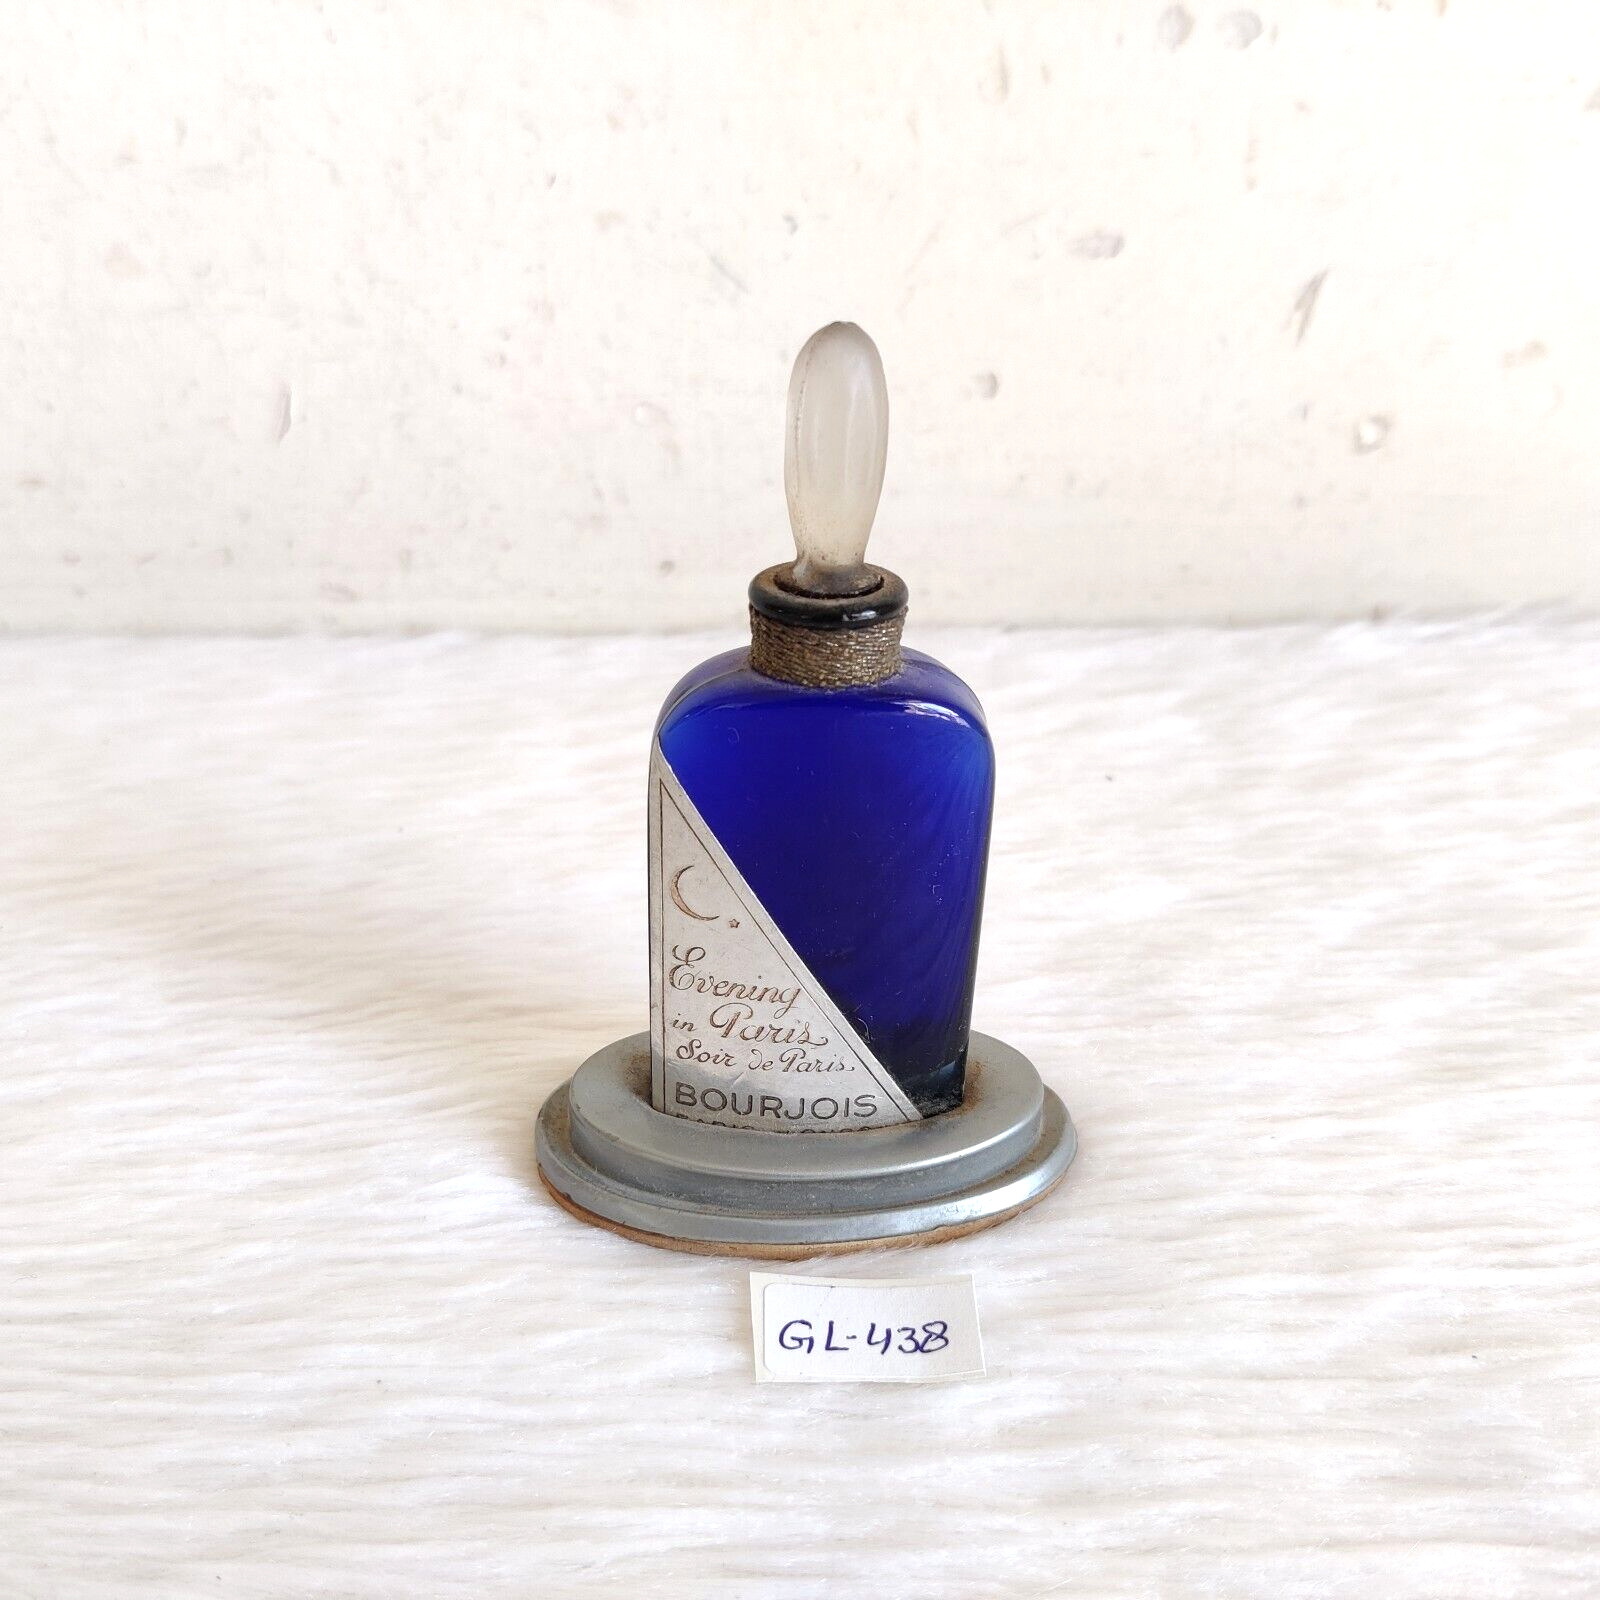 1940s Vintage Evening In Paris Bourjois Perfume Bottle Empty London Rare GL438